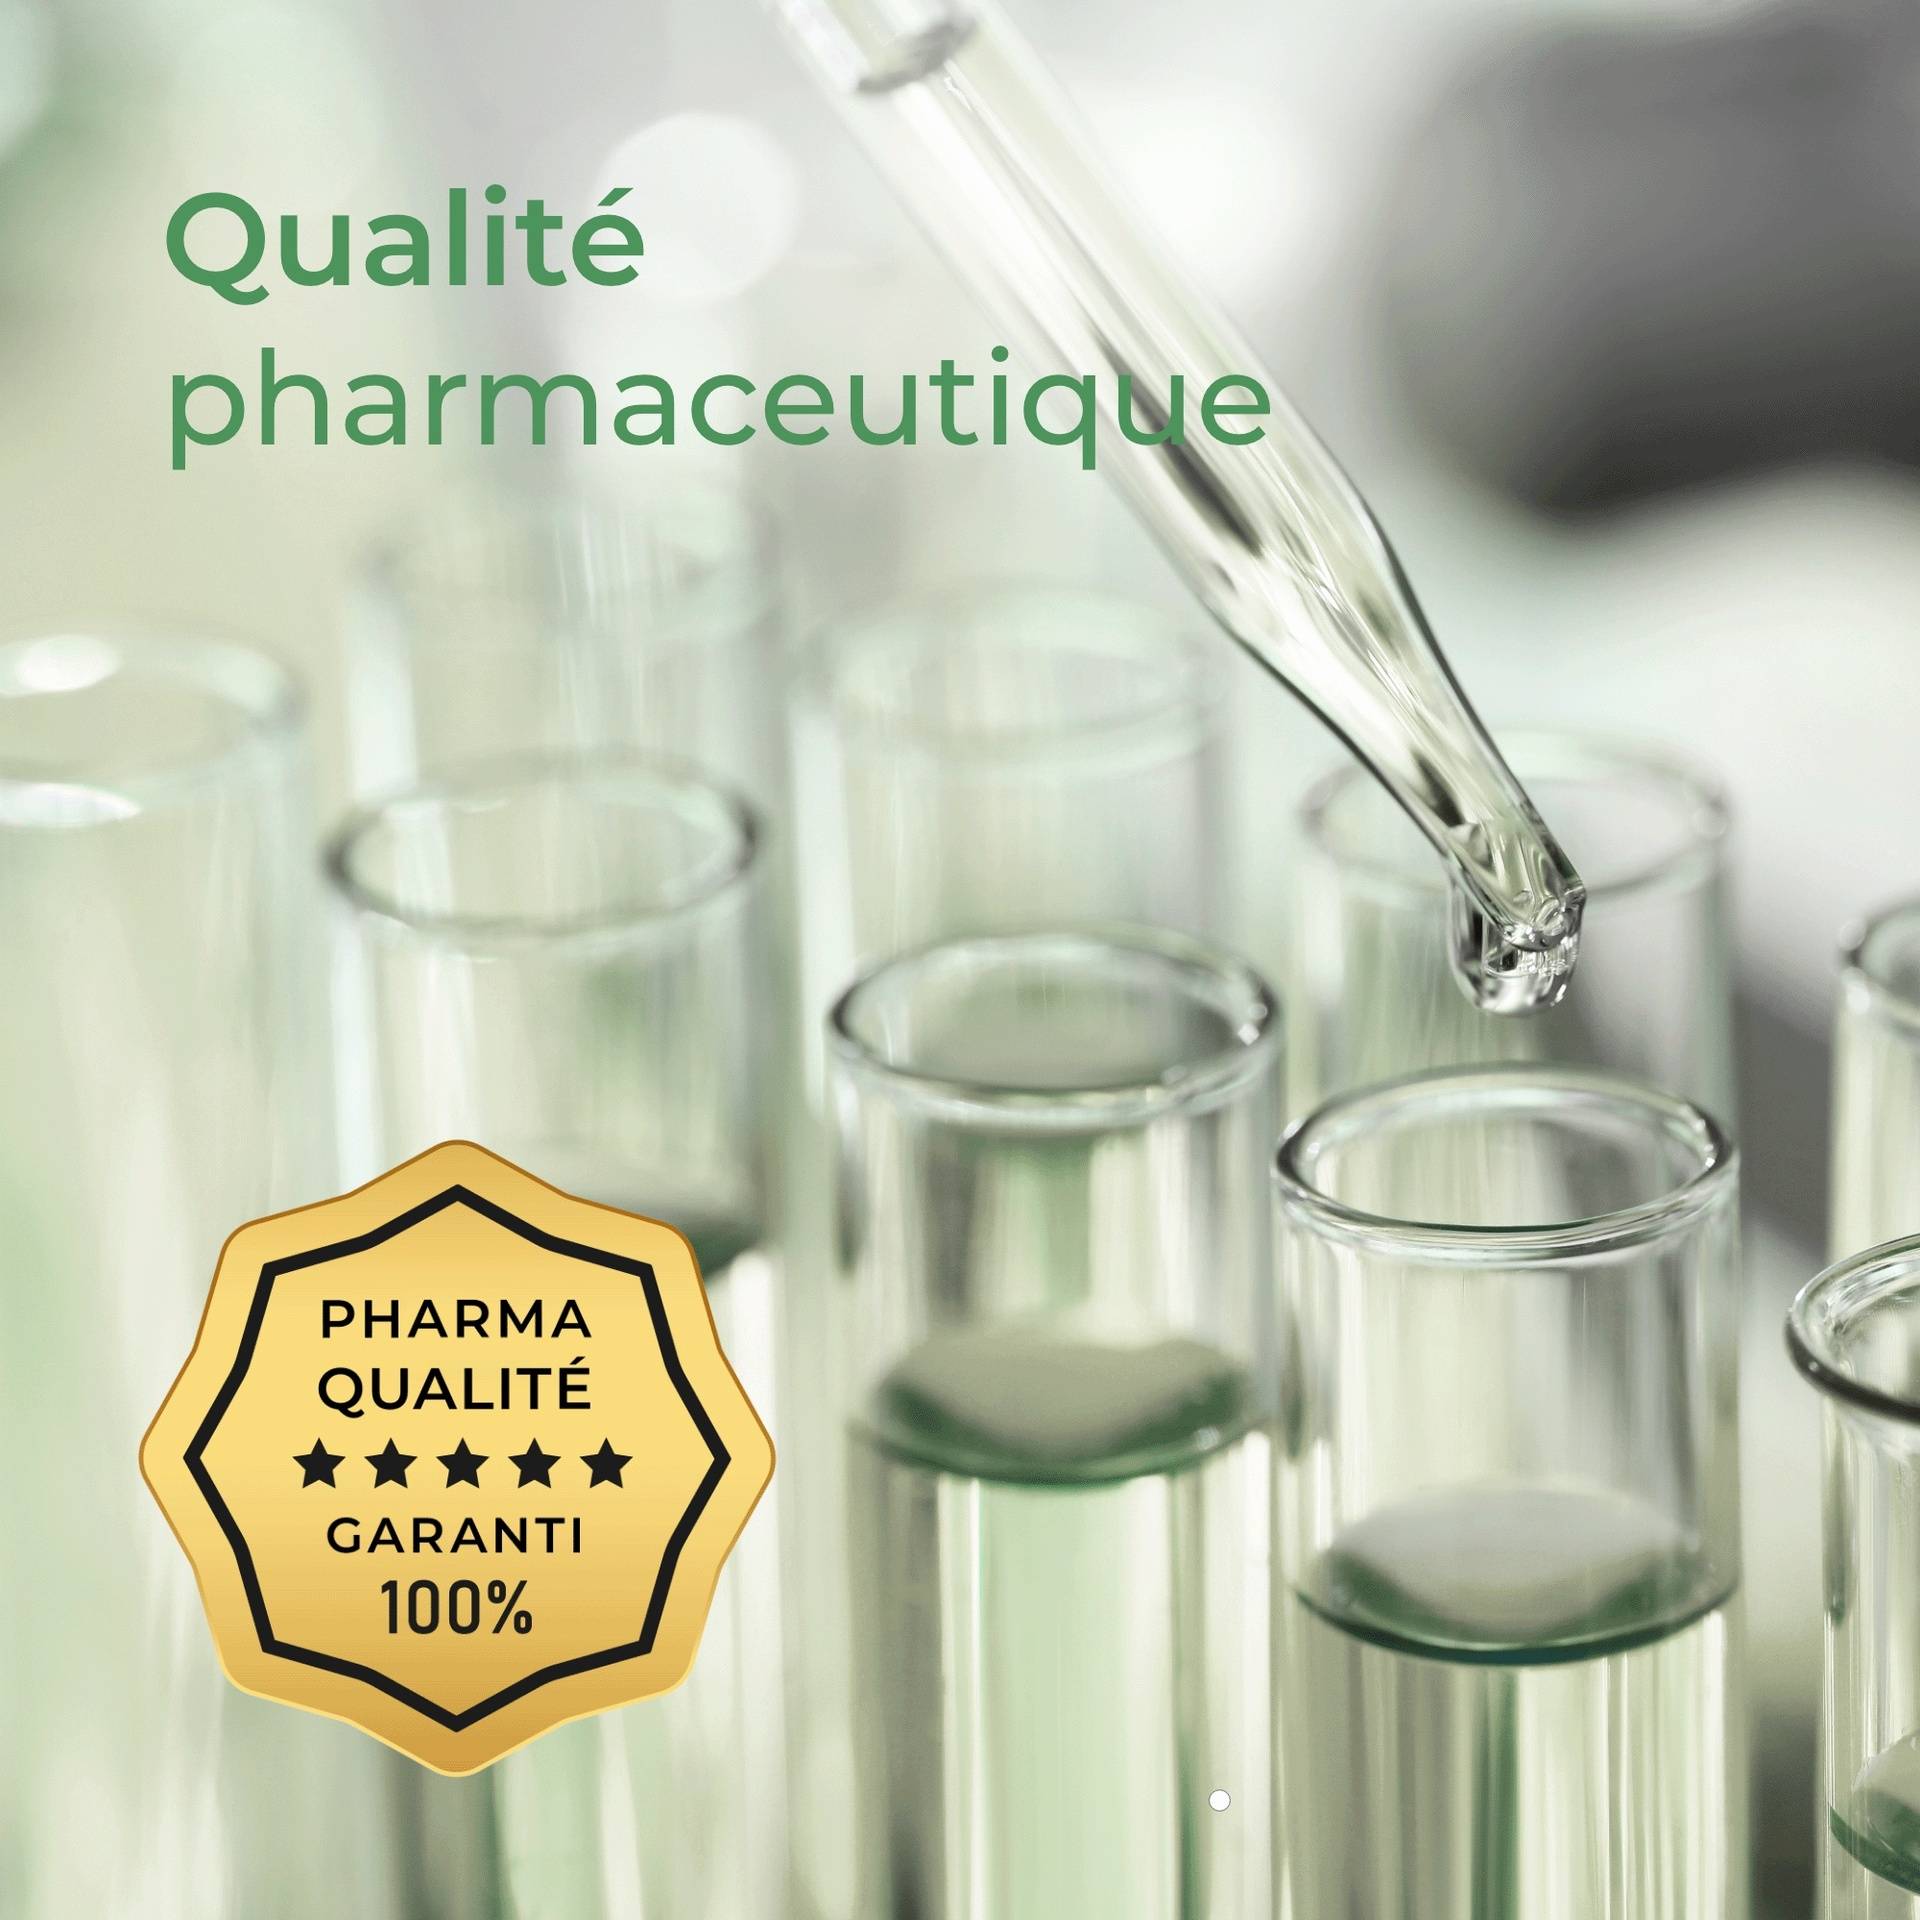 Pharma qualité